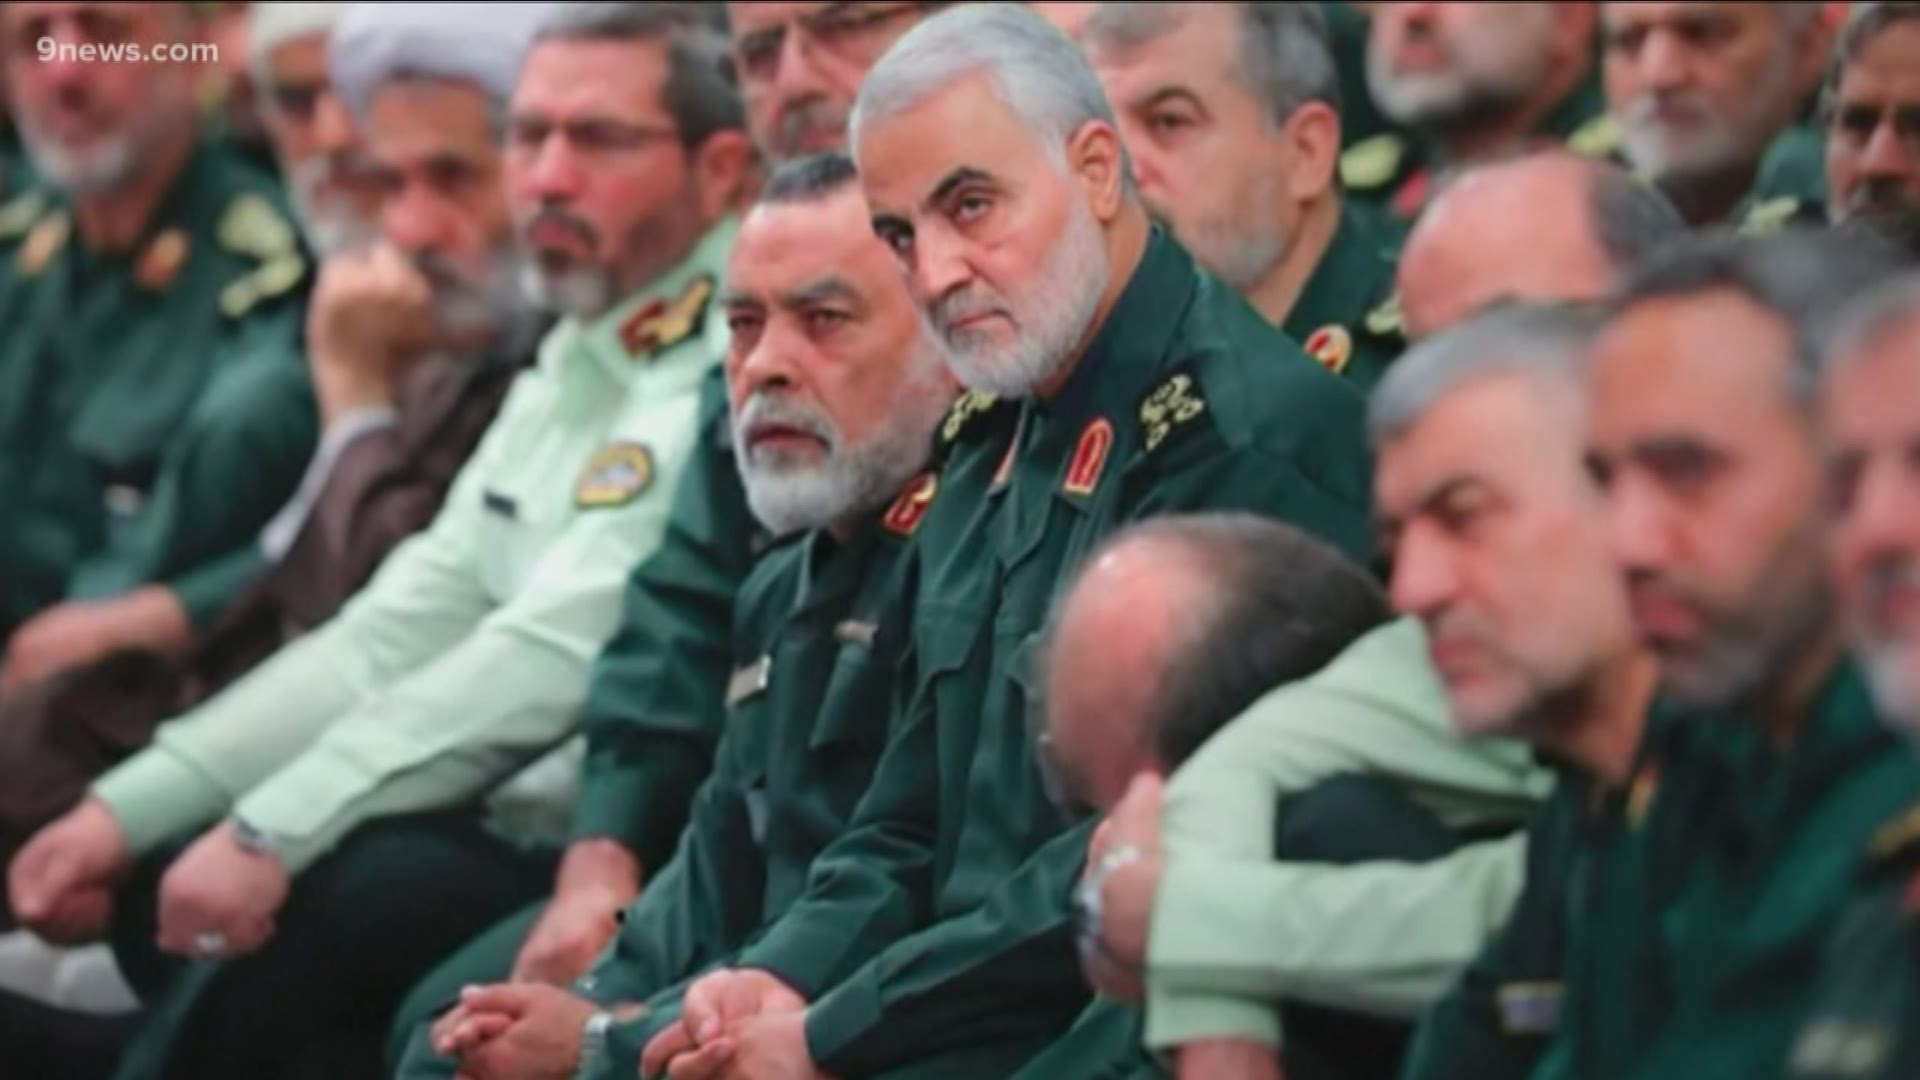 Iran vowed "harsh retaliation" for the airstrike near Baghdad's airport that killed Gen. Qassem Soleimani, the head of Iran's elite Quds Force.